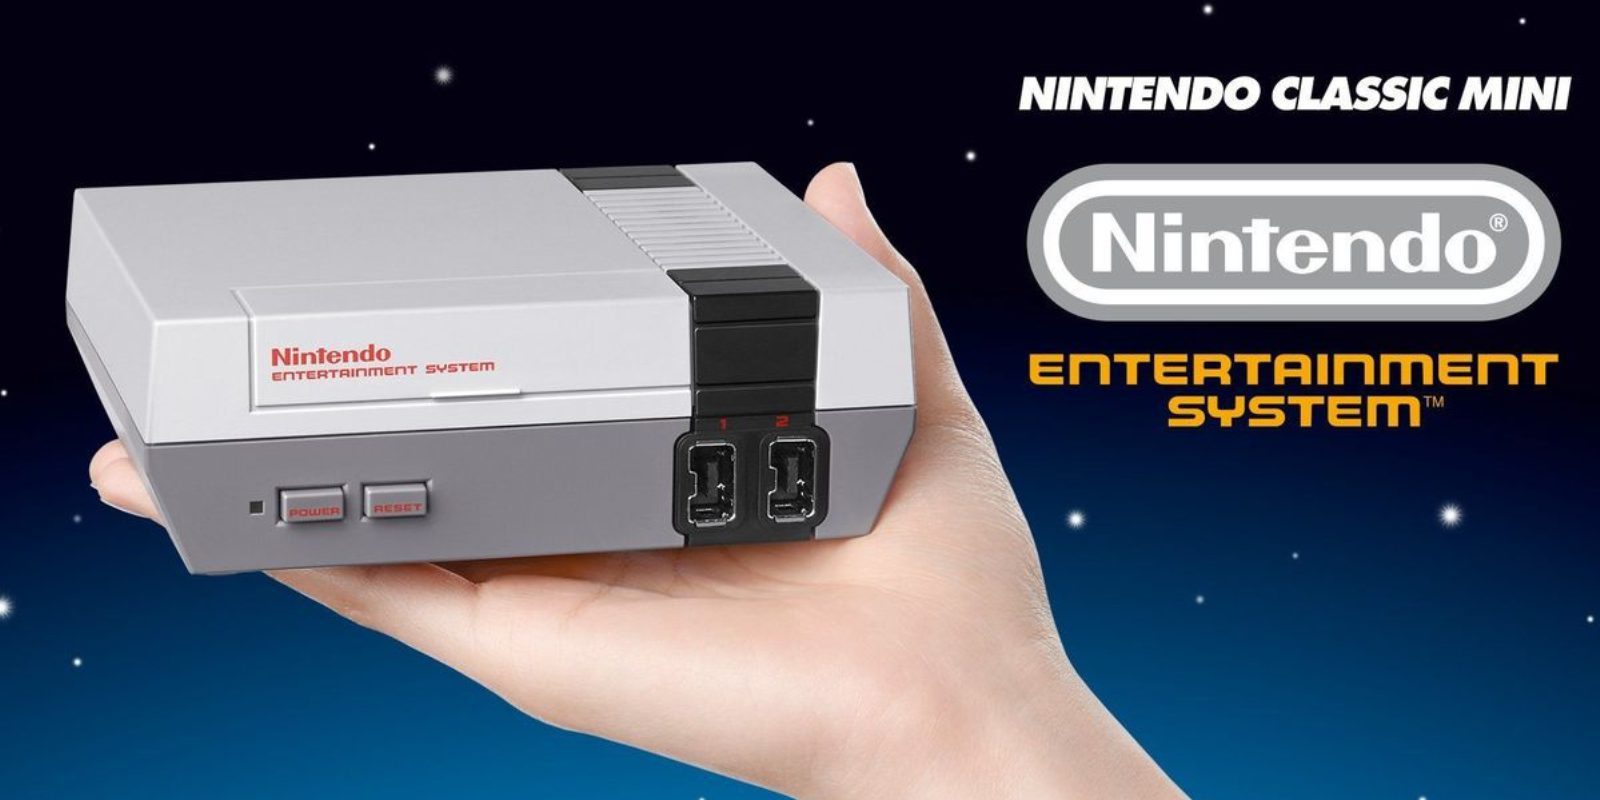 Oleada de nuevos detalles sobre NES Classic Mini por parte de Nintendo